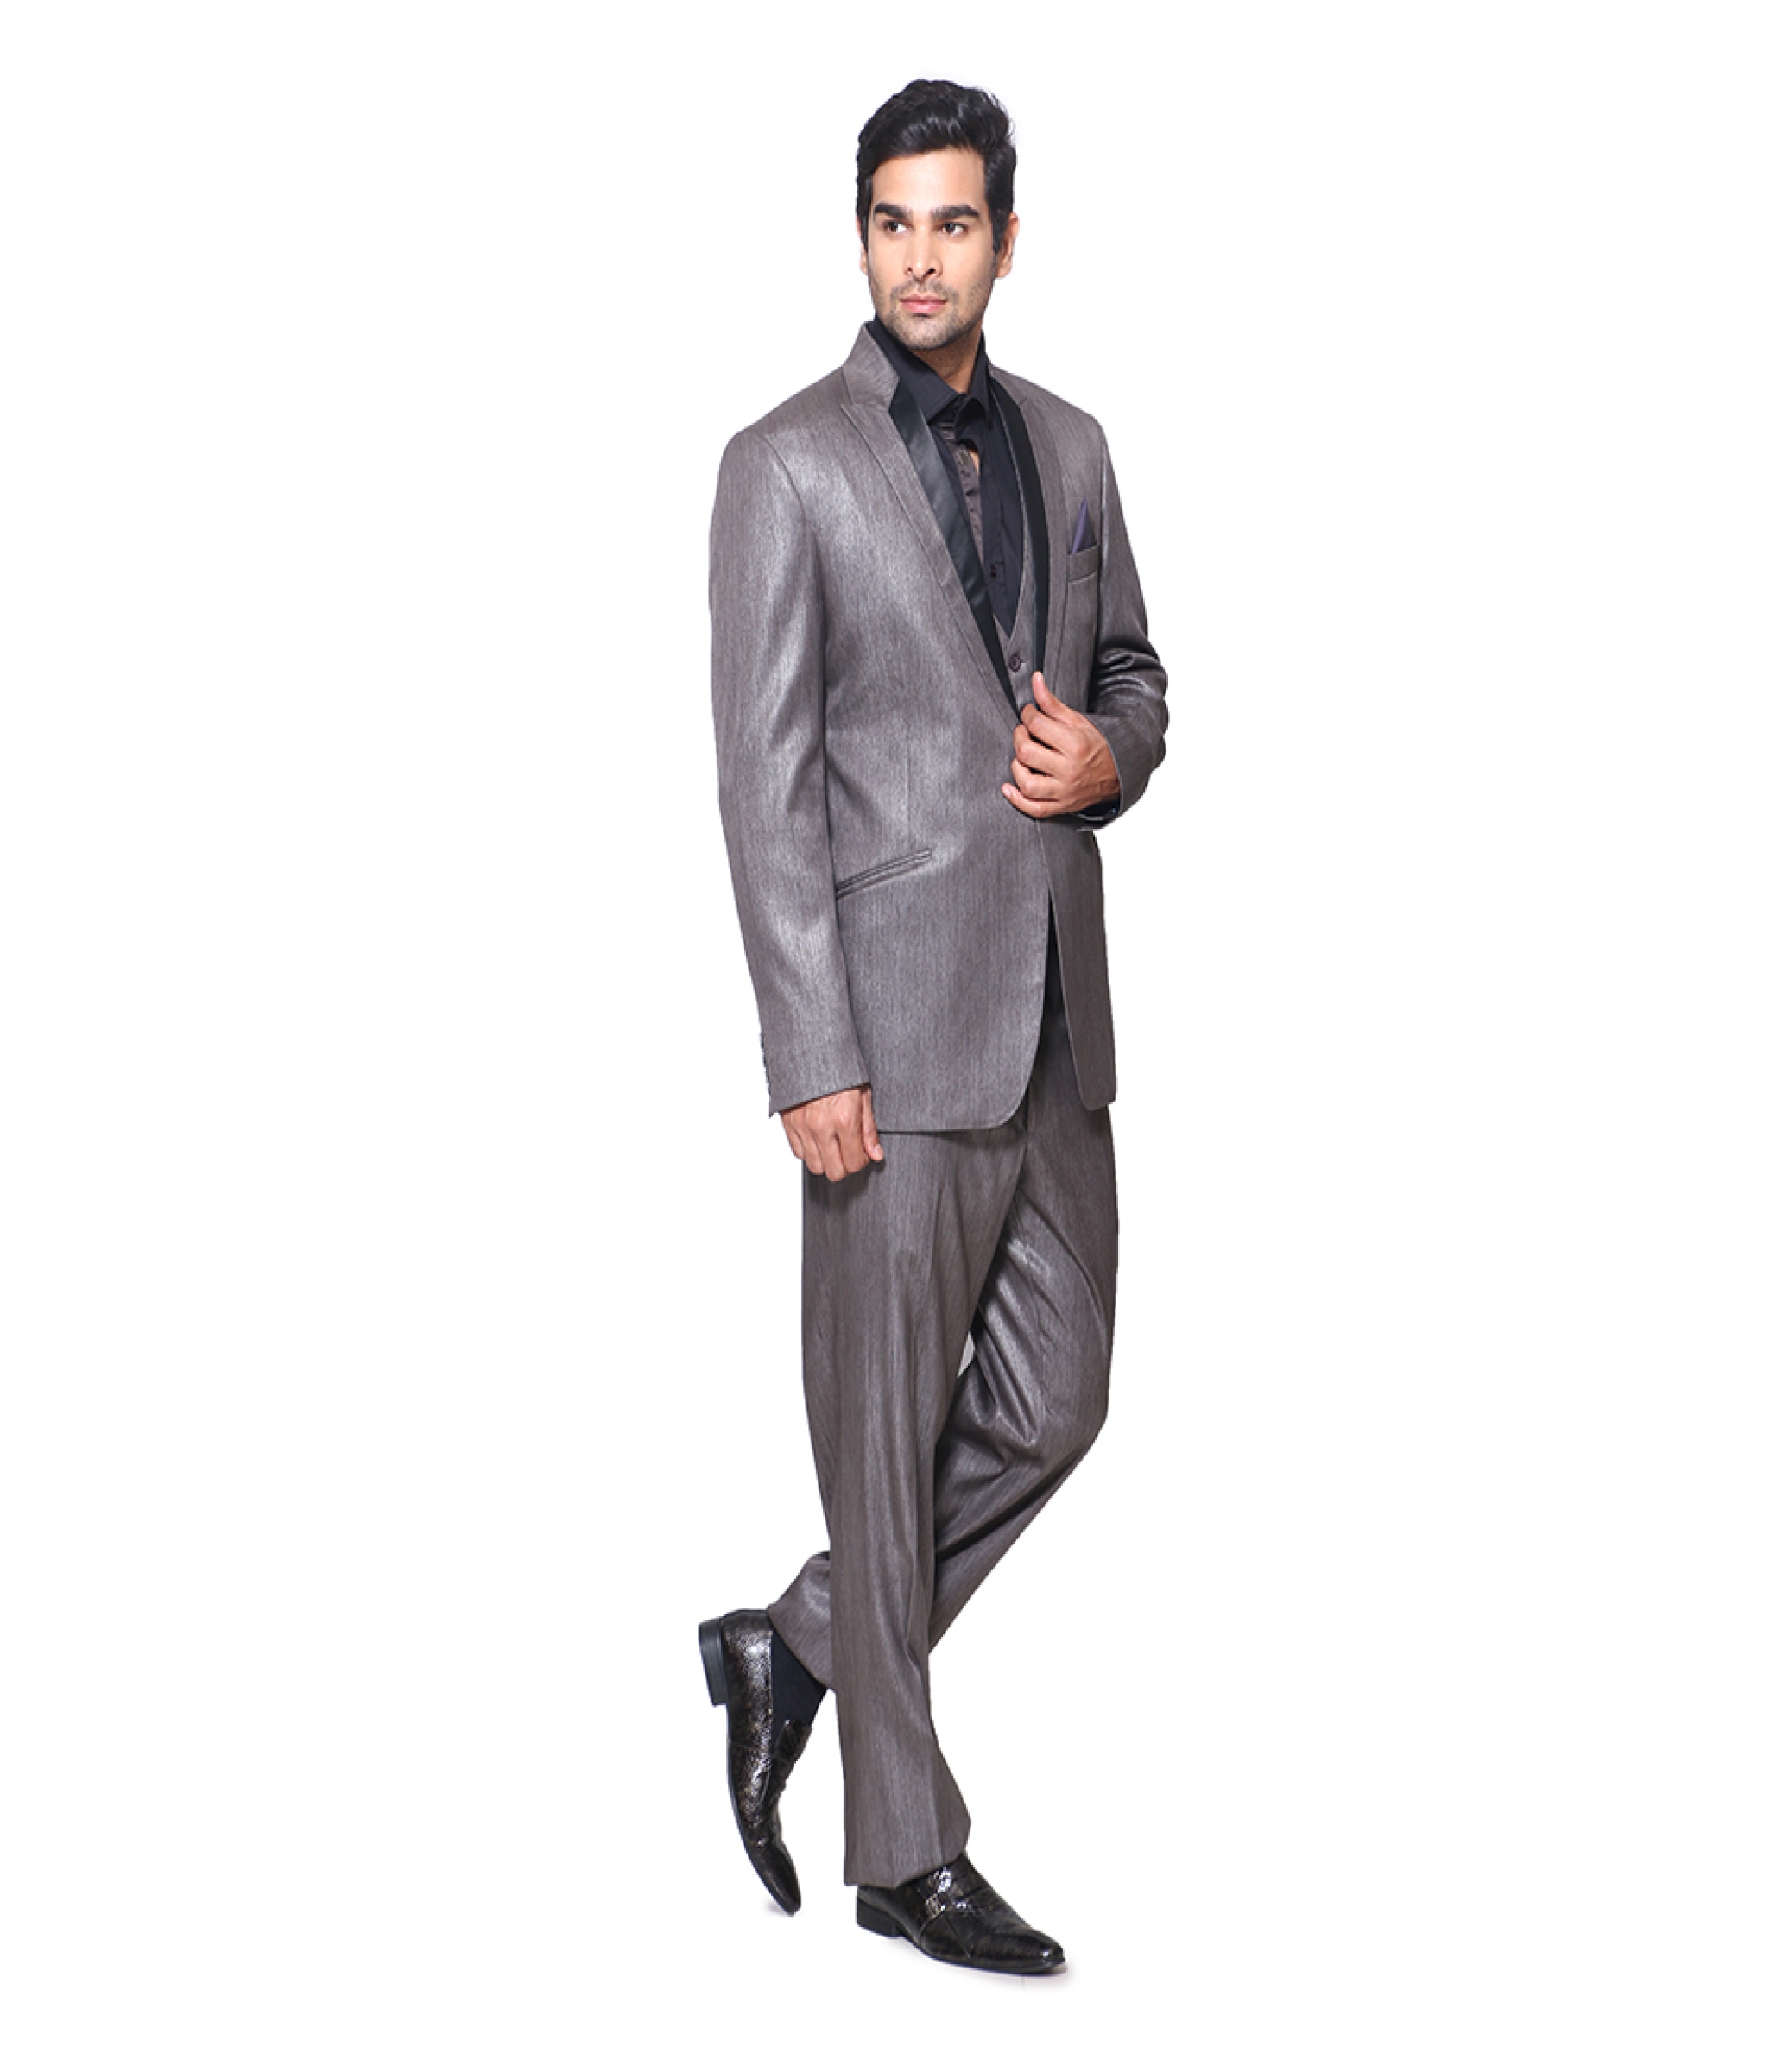 DONGD Mens Formal Suit Vest Business Dress Vest for Suit or Tuxedo, Dark  Grey, 4XL : Buy Online at Best Price in KSA - Souq is now Amazon.sa: Fashion